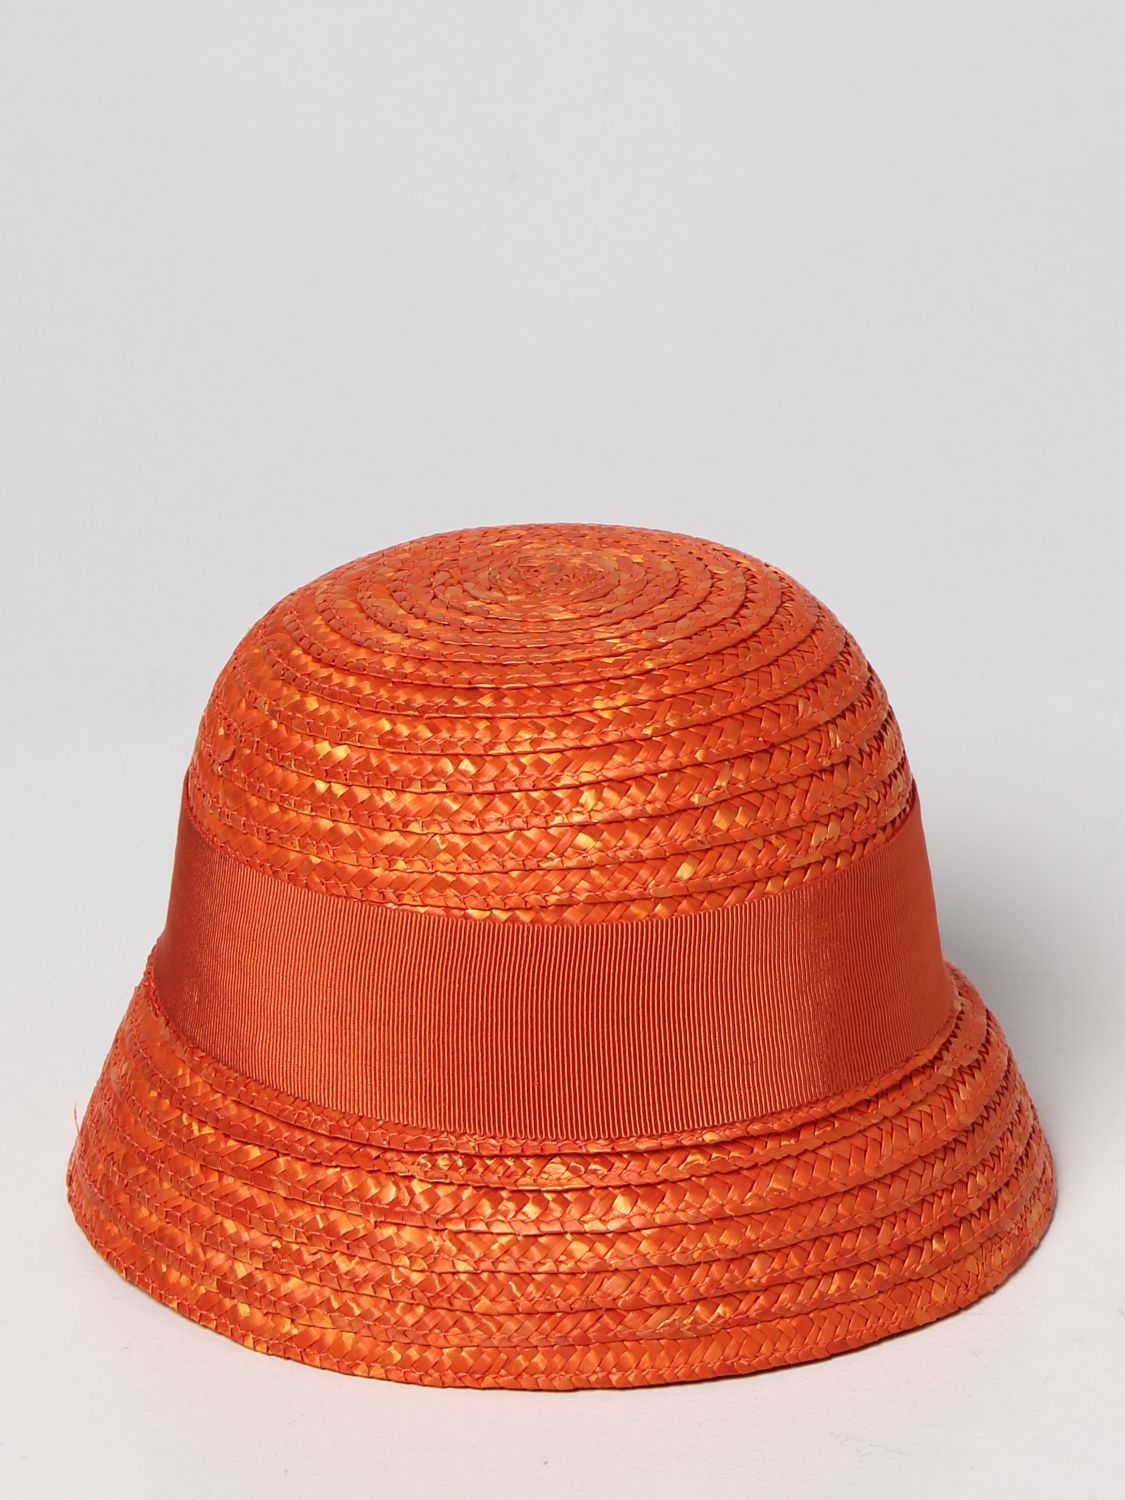 Girls' hats Mi Mi Sol: Mi Mi Sol hat in woven straw orange 2